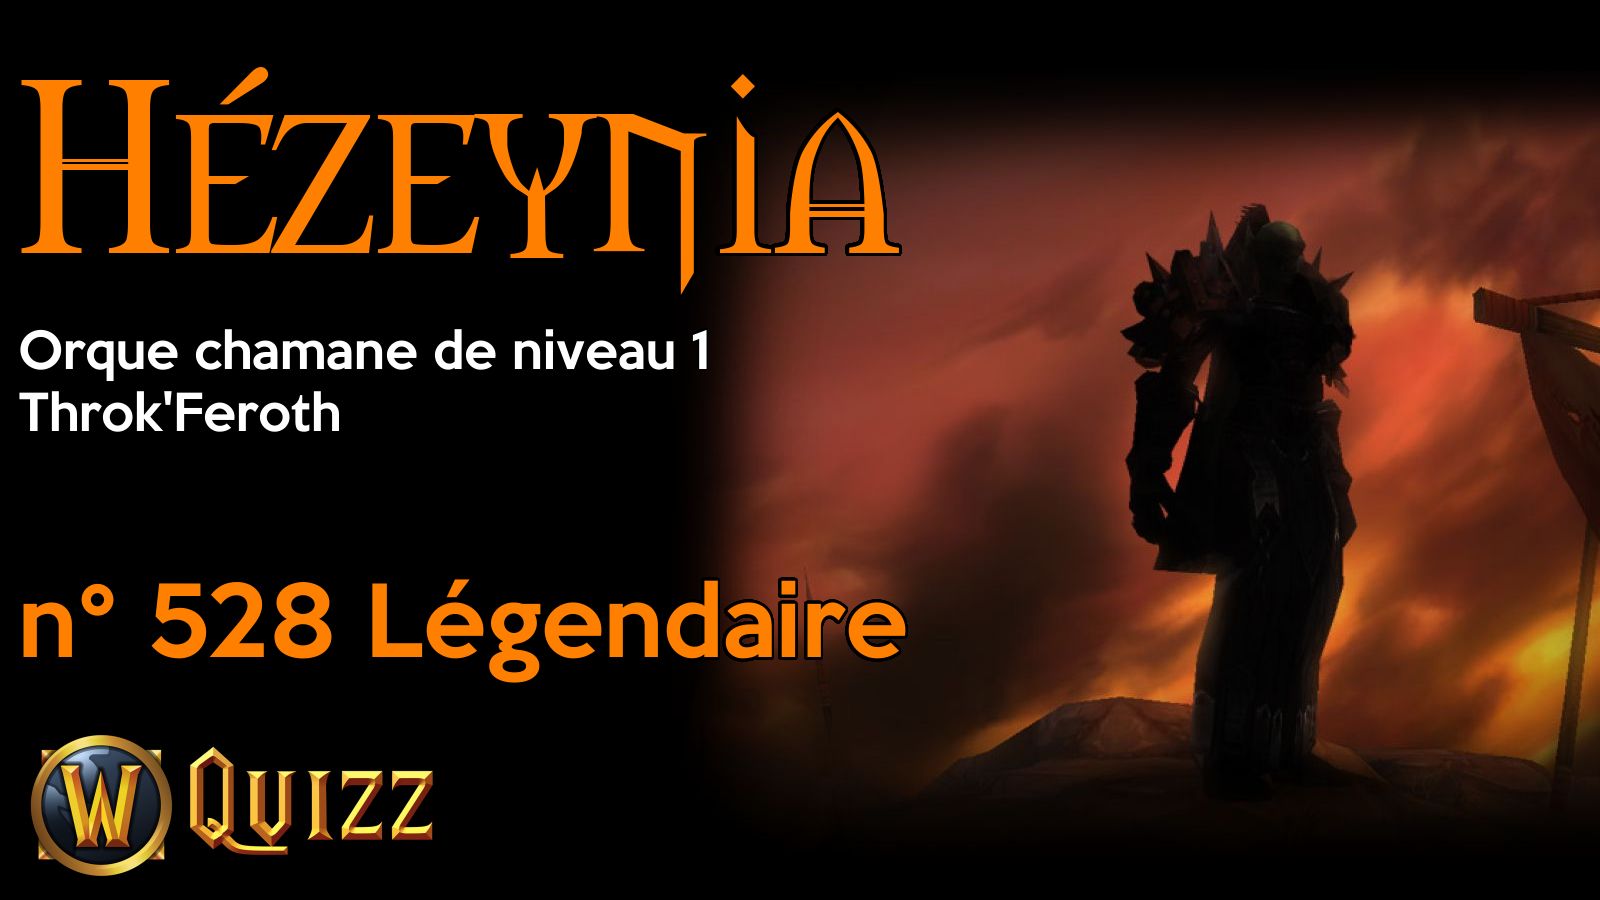 Hézeynia, Orque chamane de niveau 1, Throk'Feroth